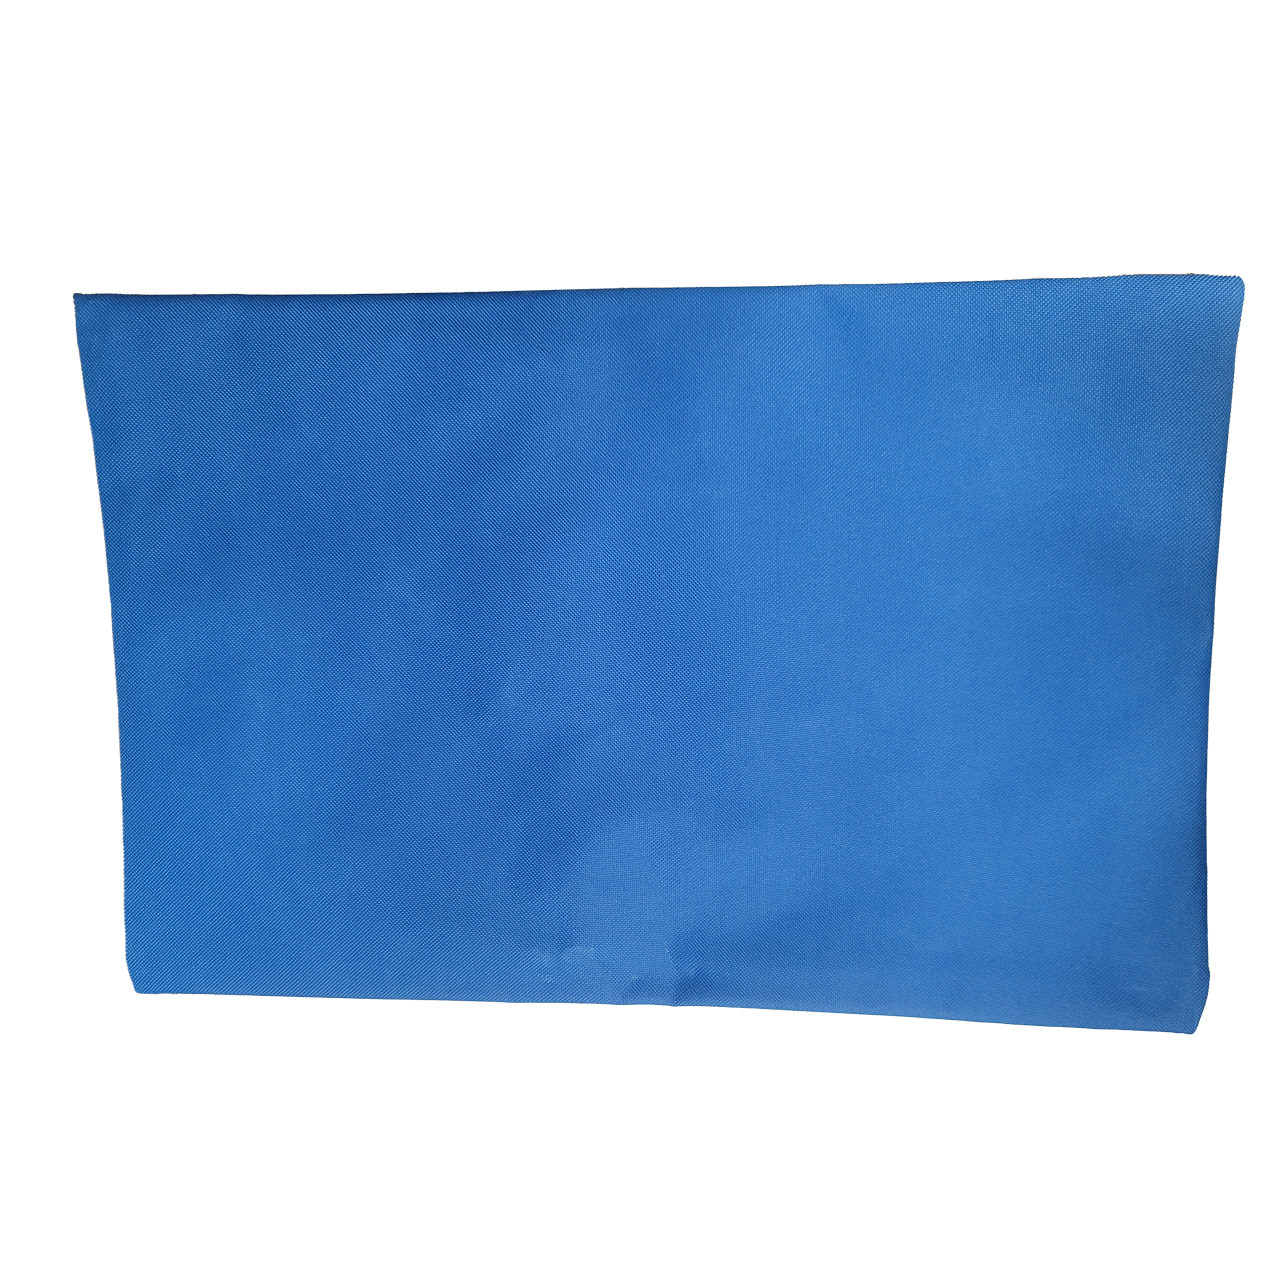 Blue Document Ballot Bag with Lock Hole Zippers Head